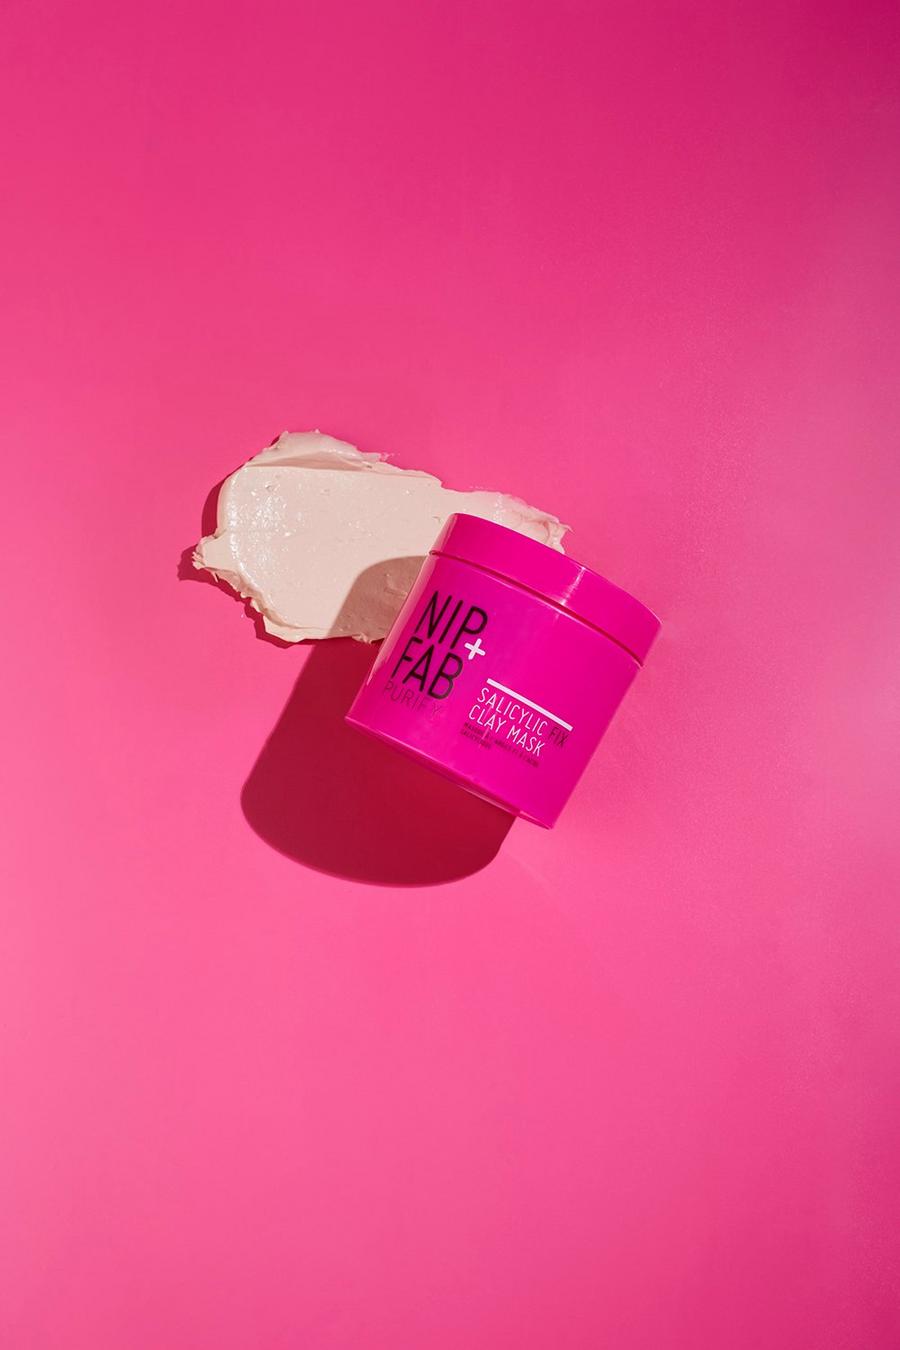 Nip & Fab Salicylhaltige Fix Tonerde-Maske, Rosa pink